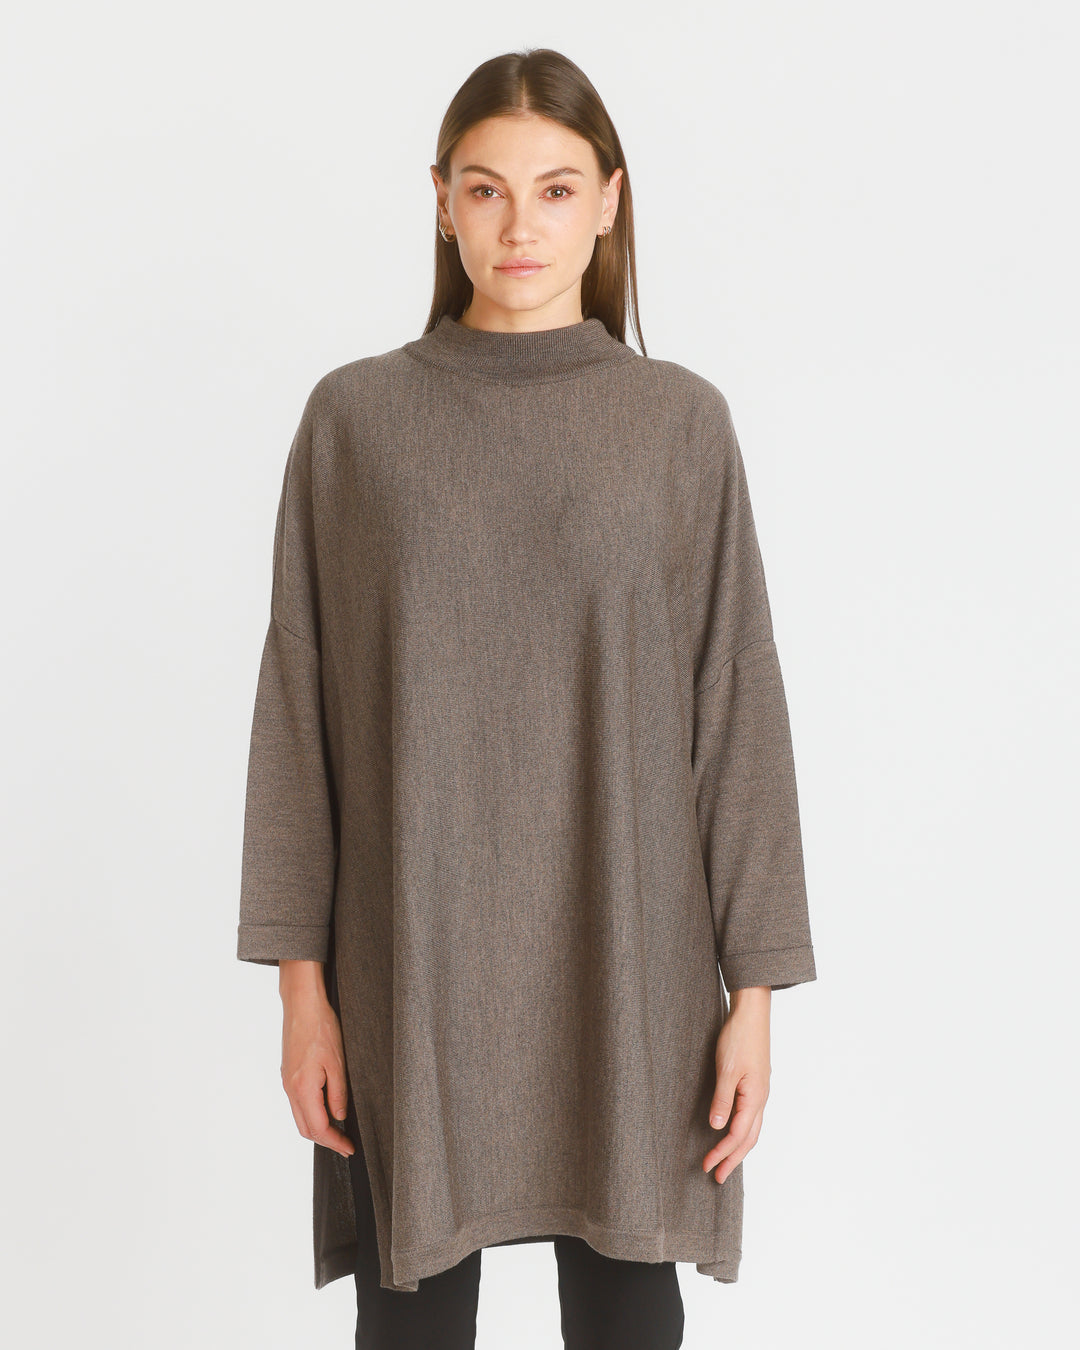 Vilna  Merino Sweater Tunic. Taupe. One Size. Final Sale